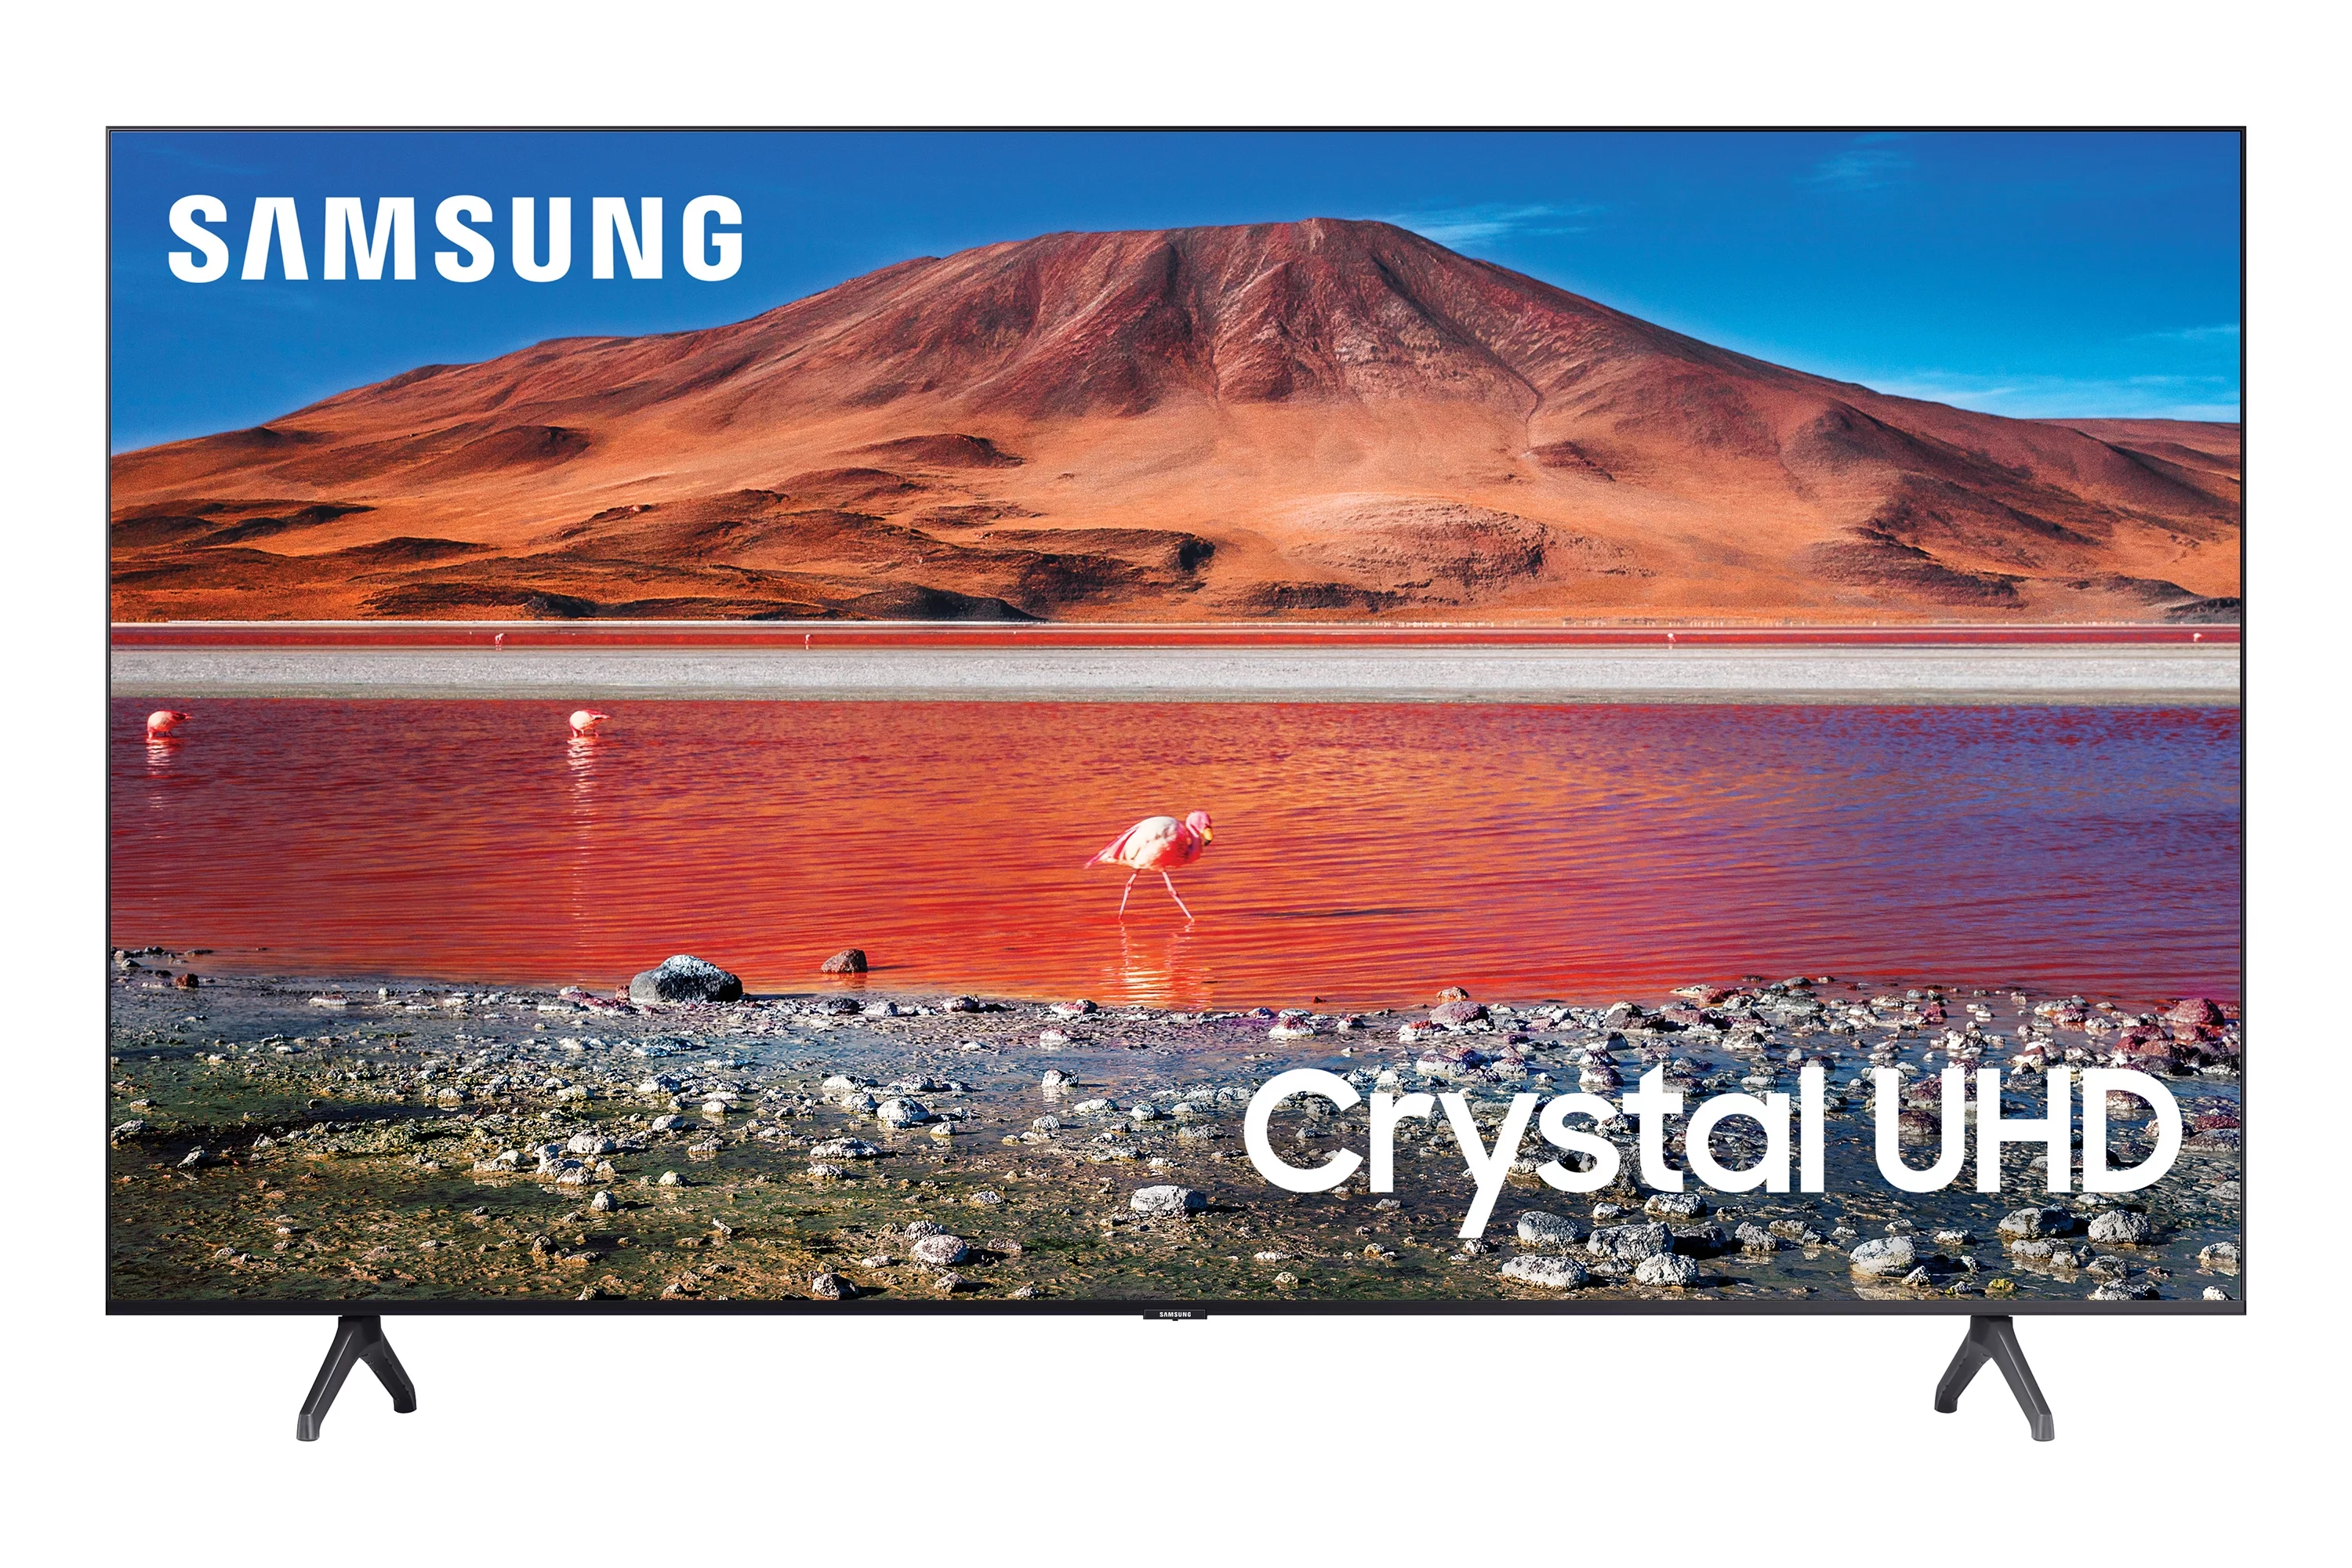 SAMSUNG 50" Class 4K Crystal UHD (2160P) LED Smart TV with HDR UN50TU7000 2020